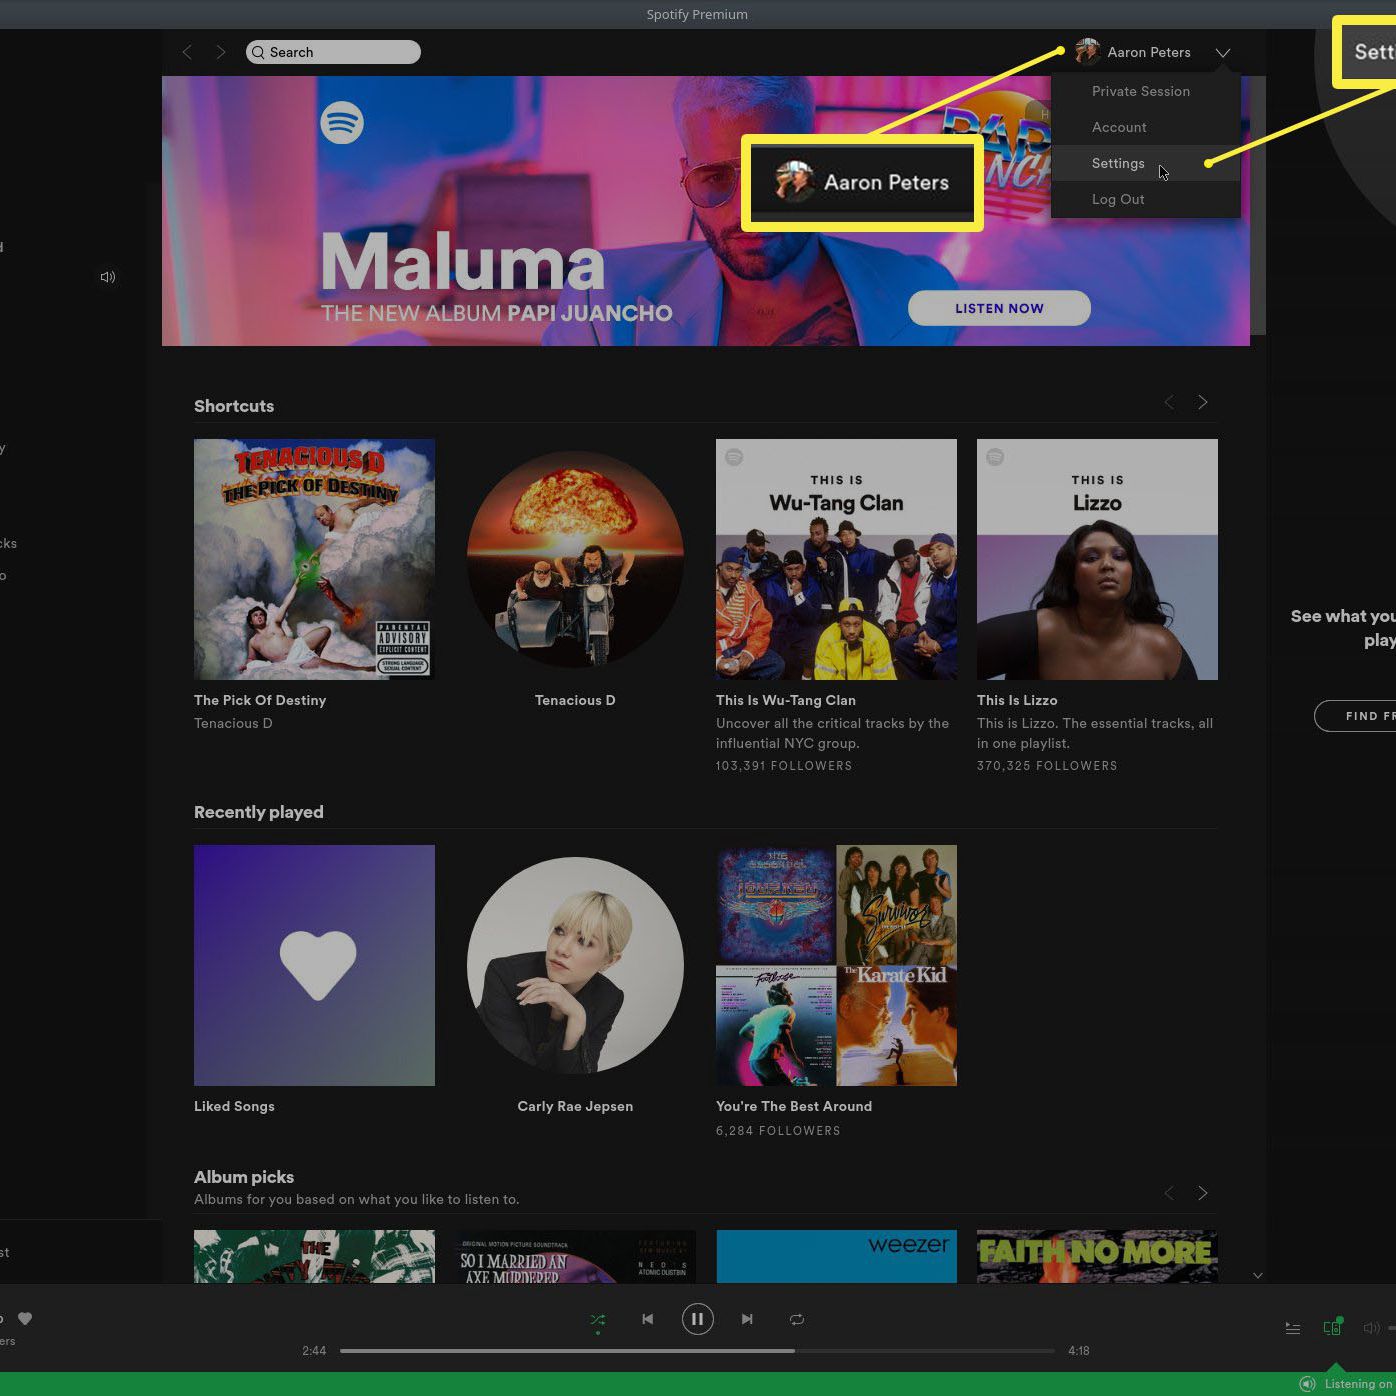 Spotify free music streaming